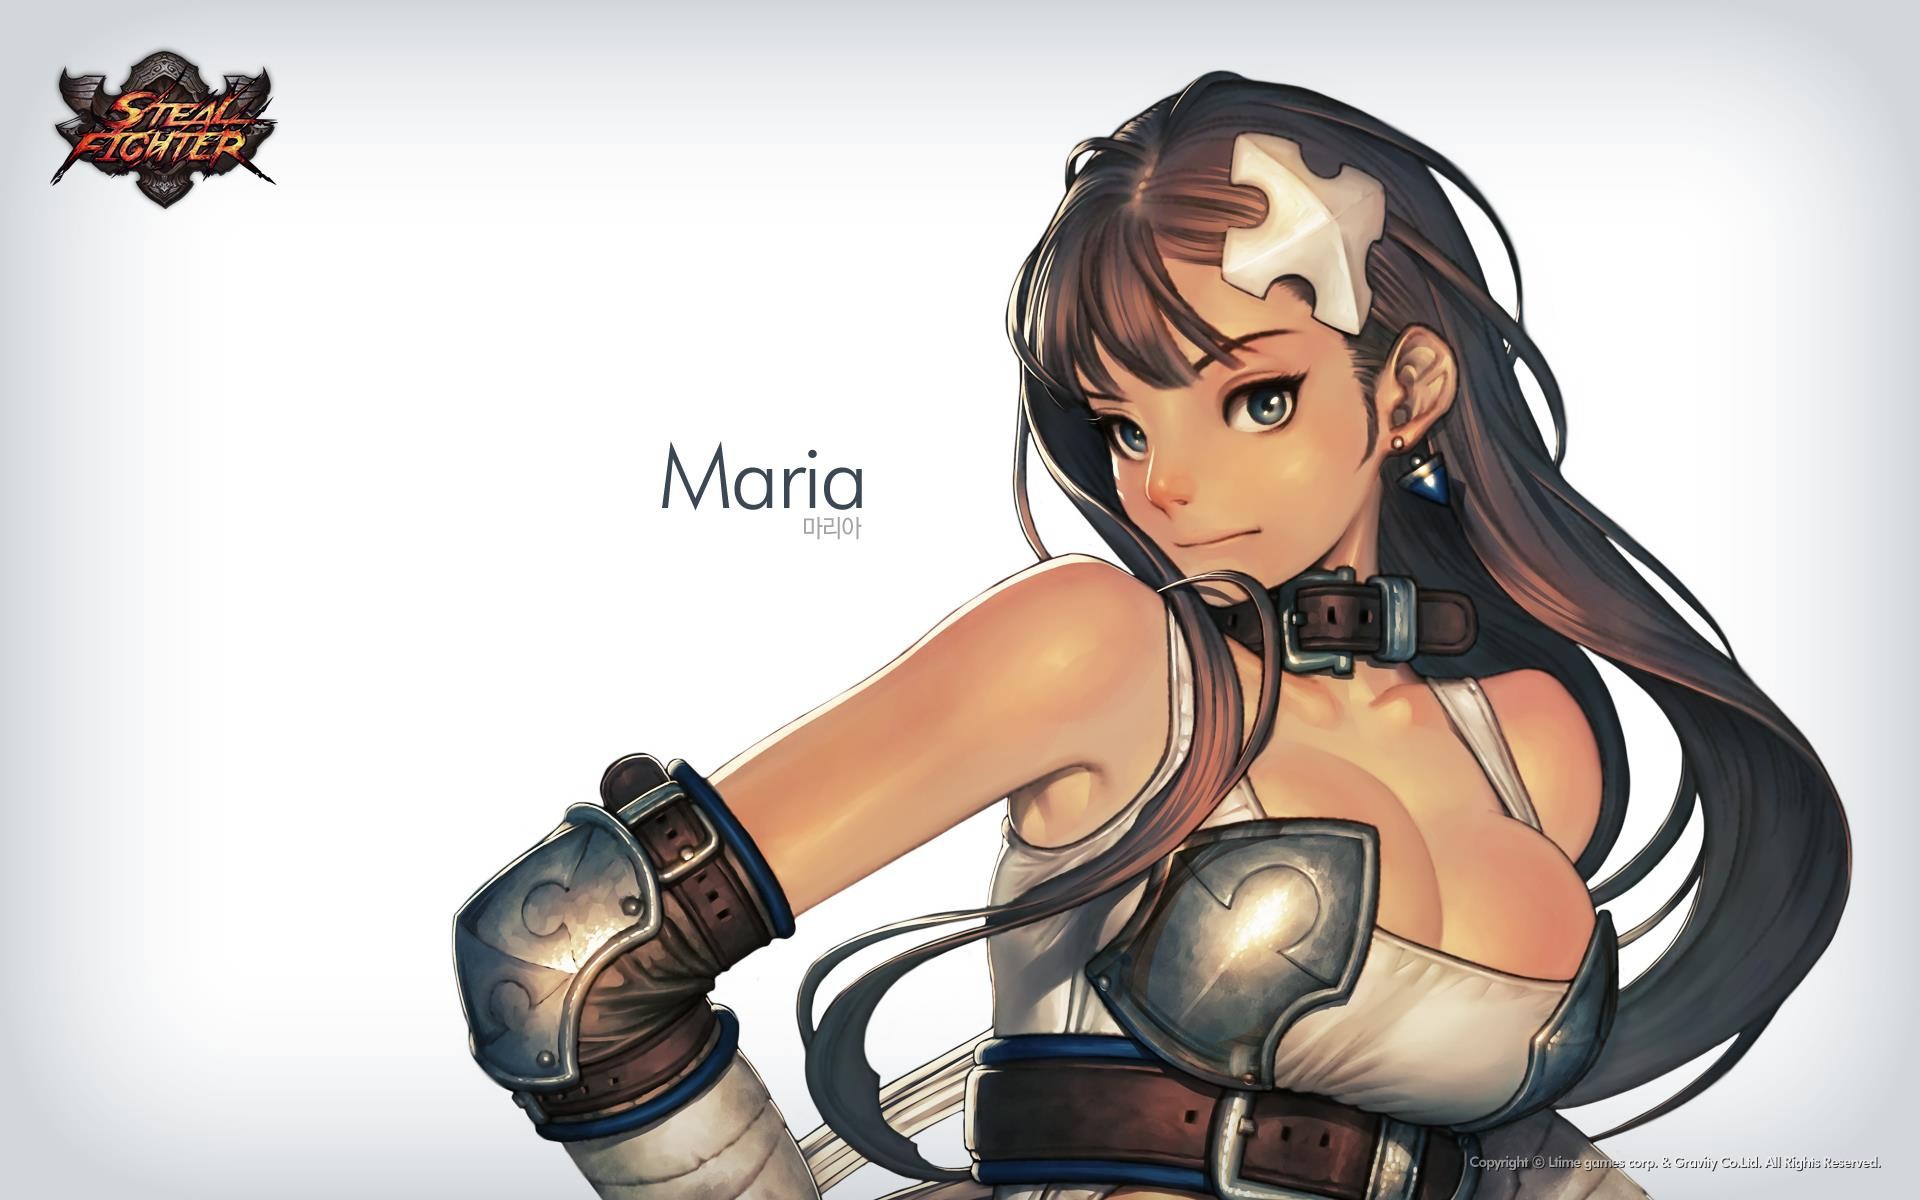 Maria games. Maria игра. Азиатки из игр. Fighter person.